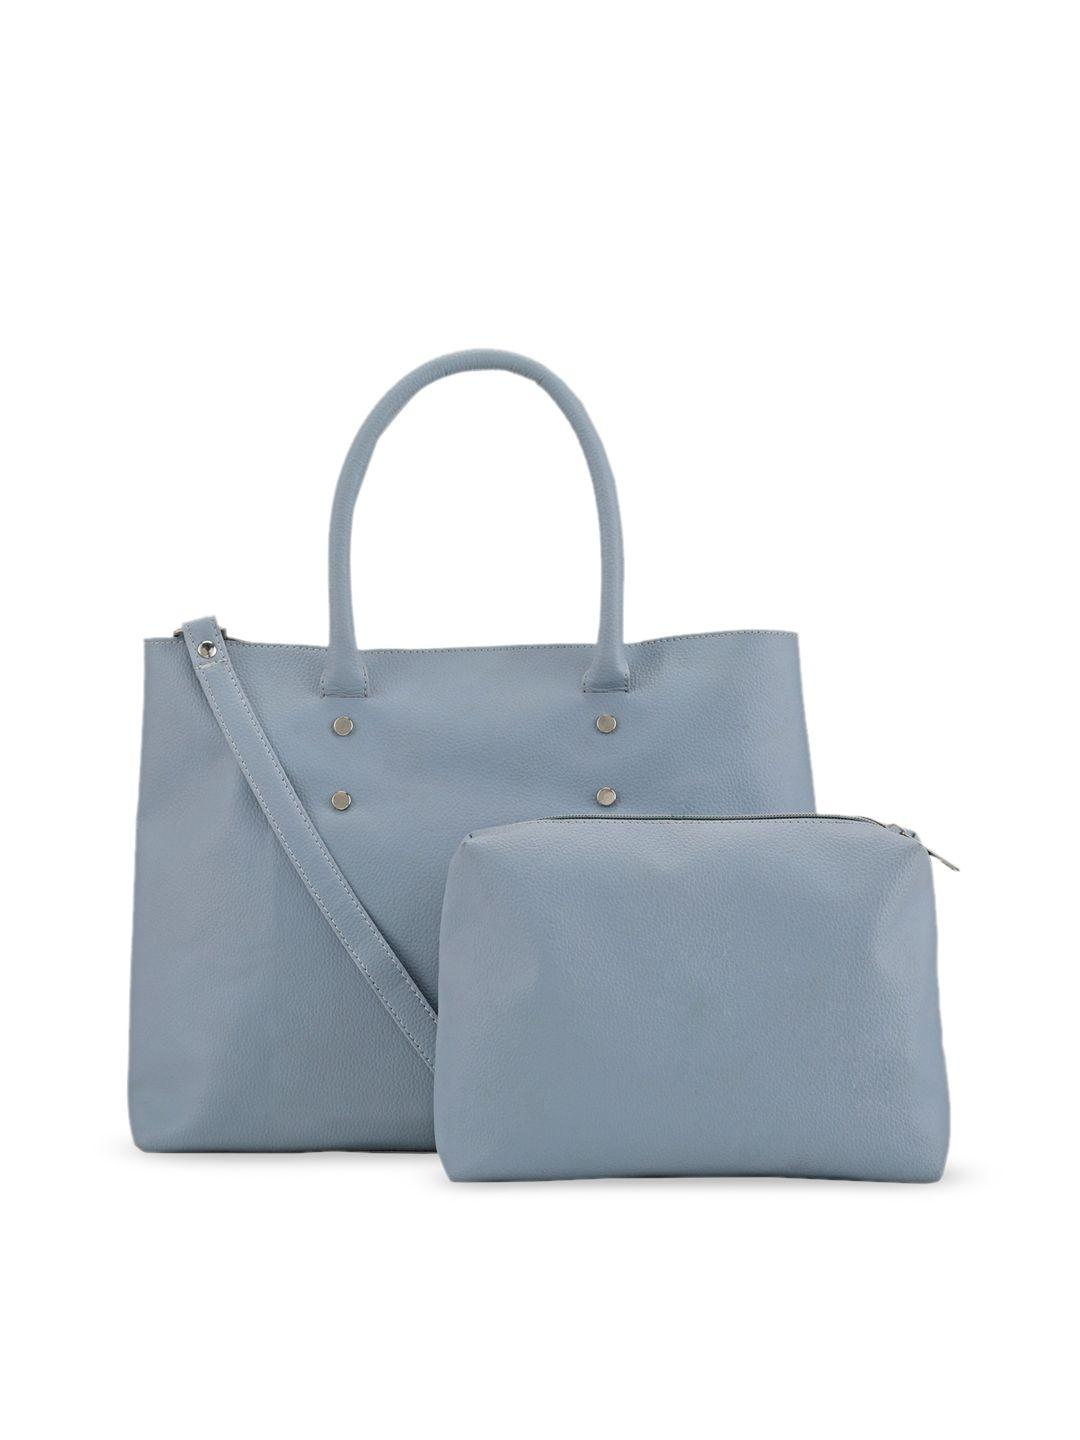 toteteca blue pu oversized structured shoulder bag with tasselled